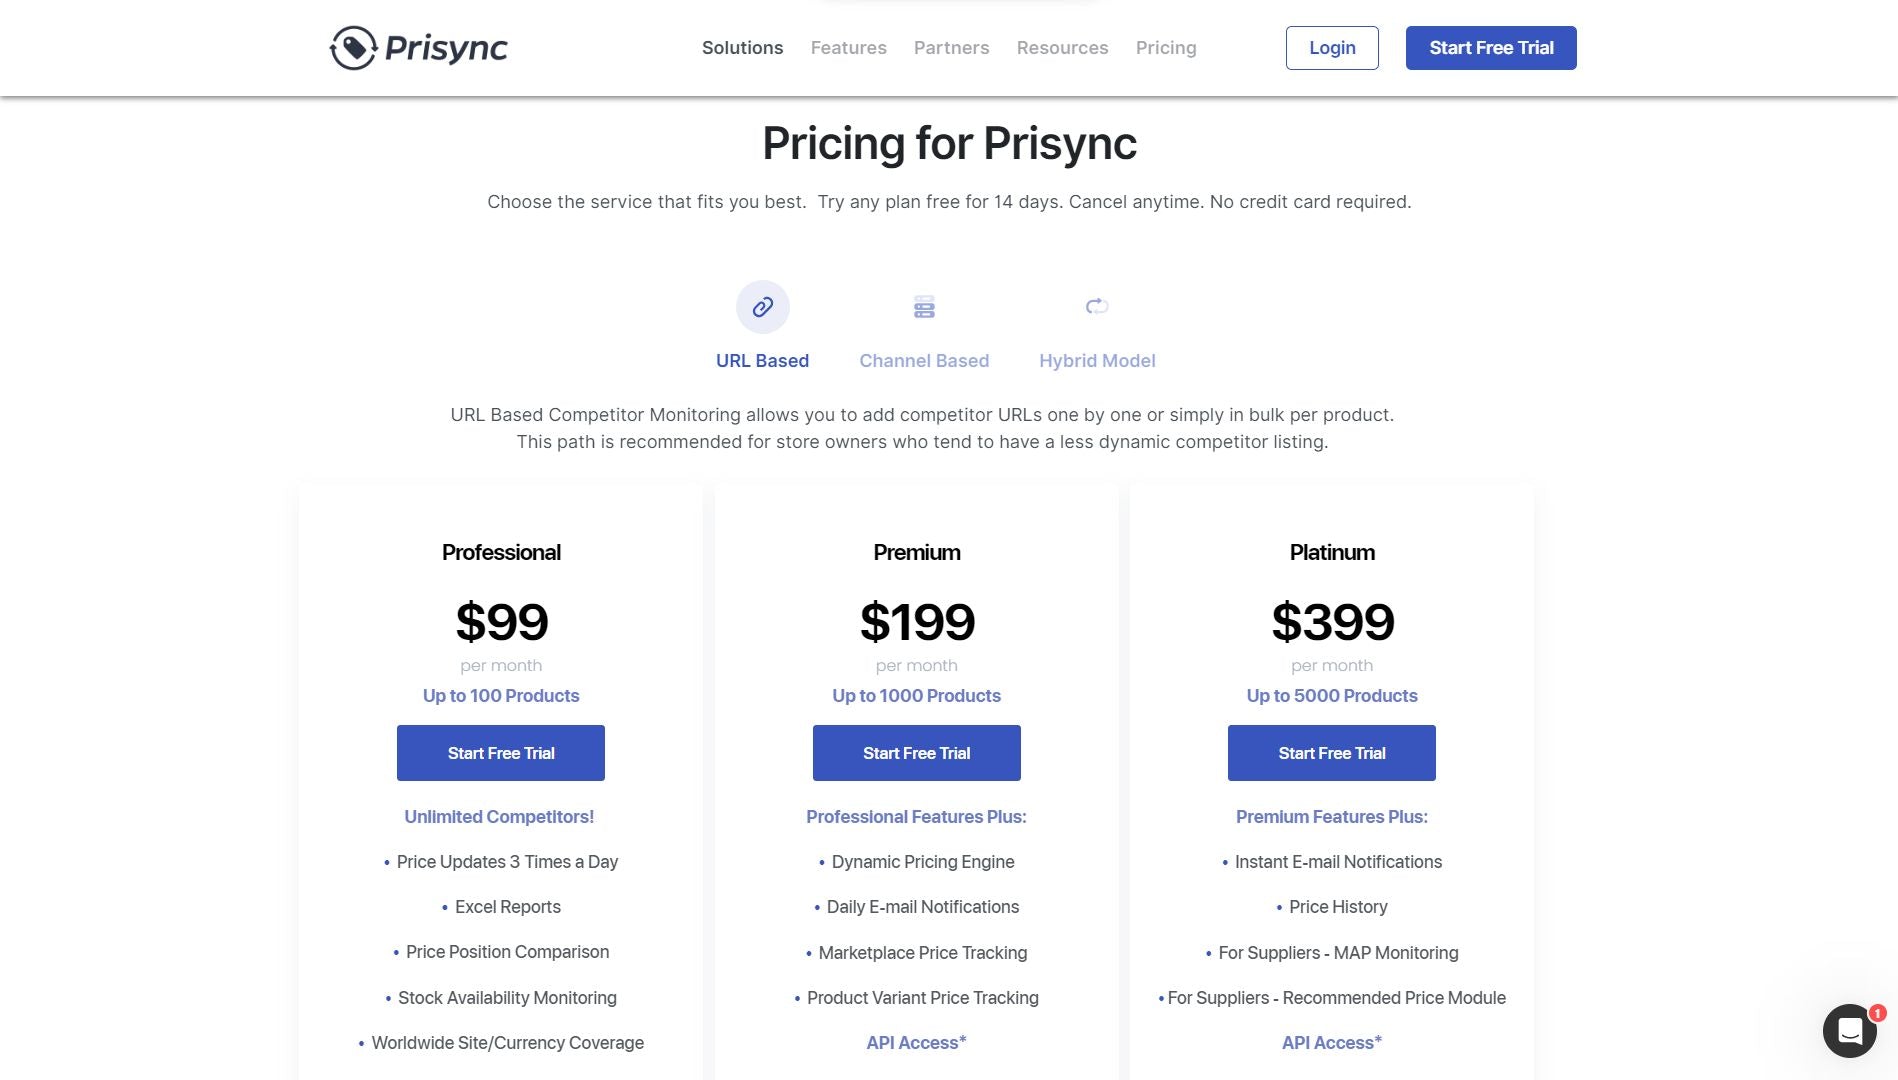 Prisync’s pricing plans